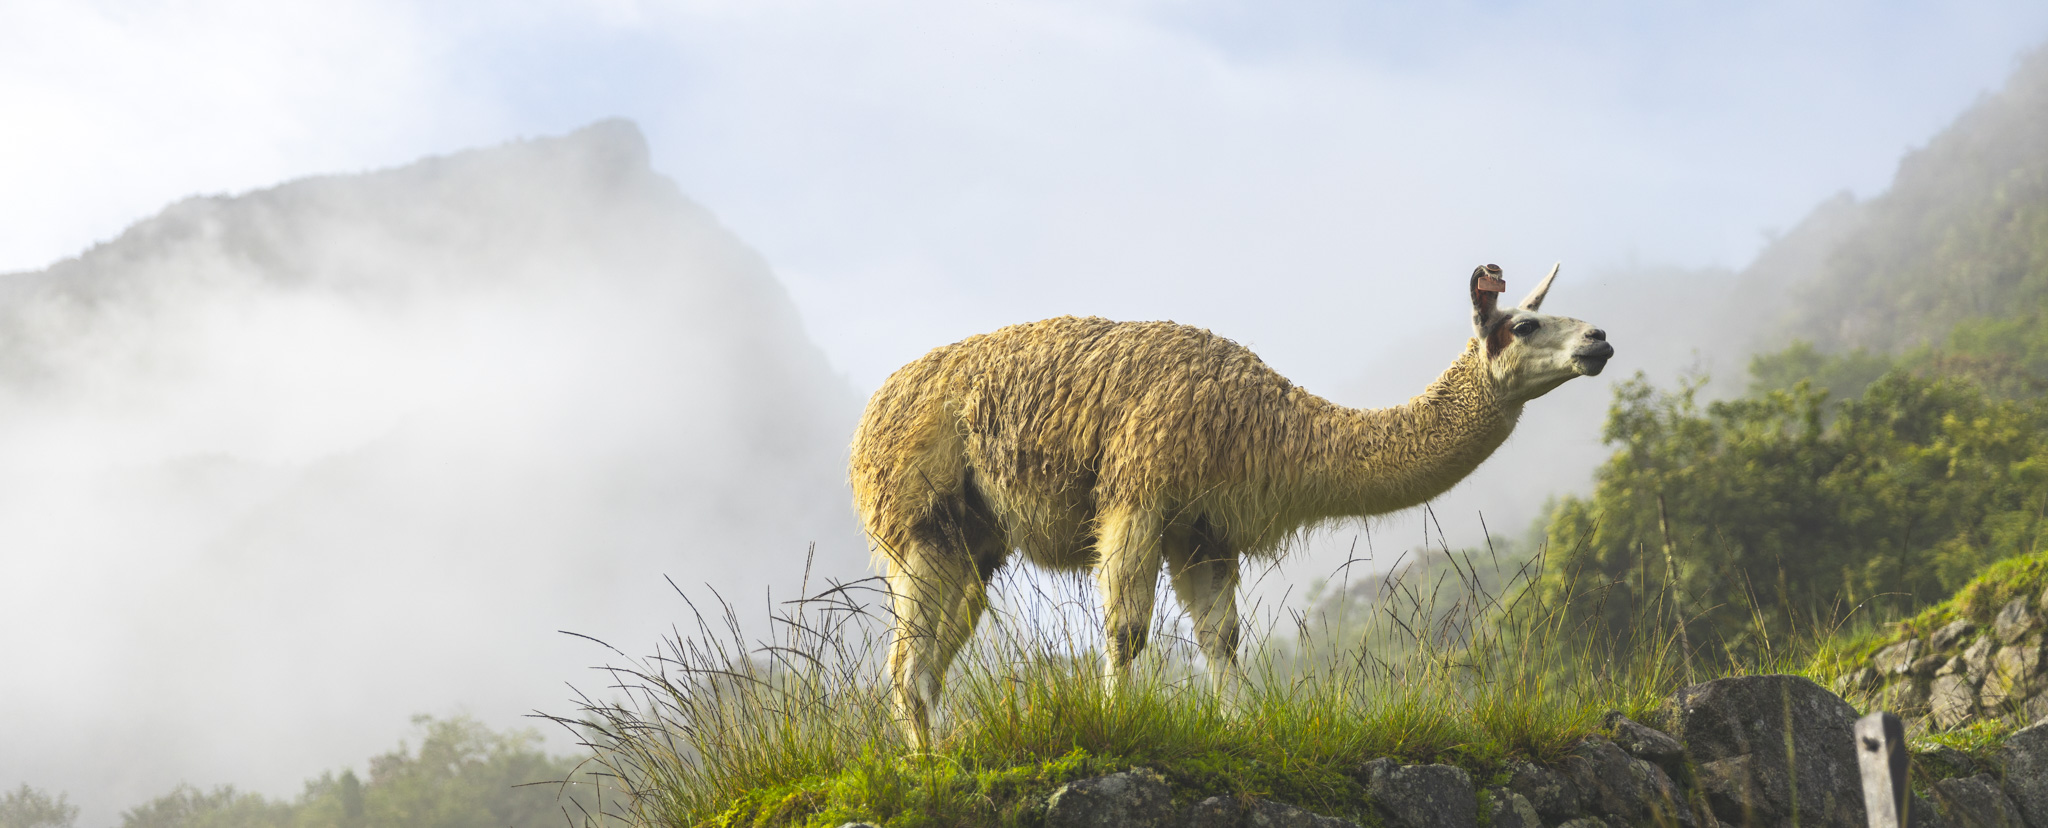 One of the llamas of Machu Picchu